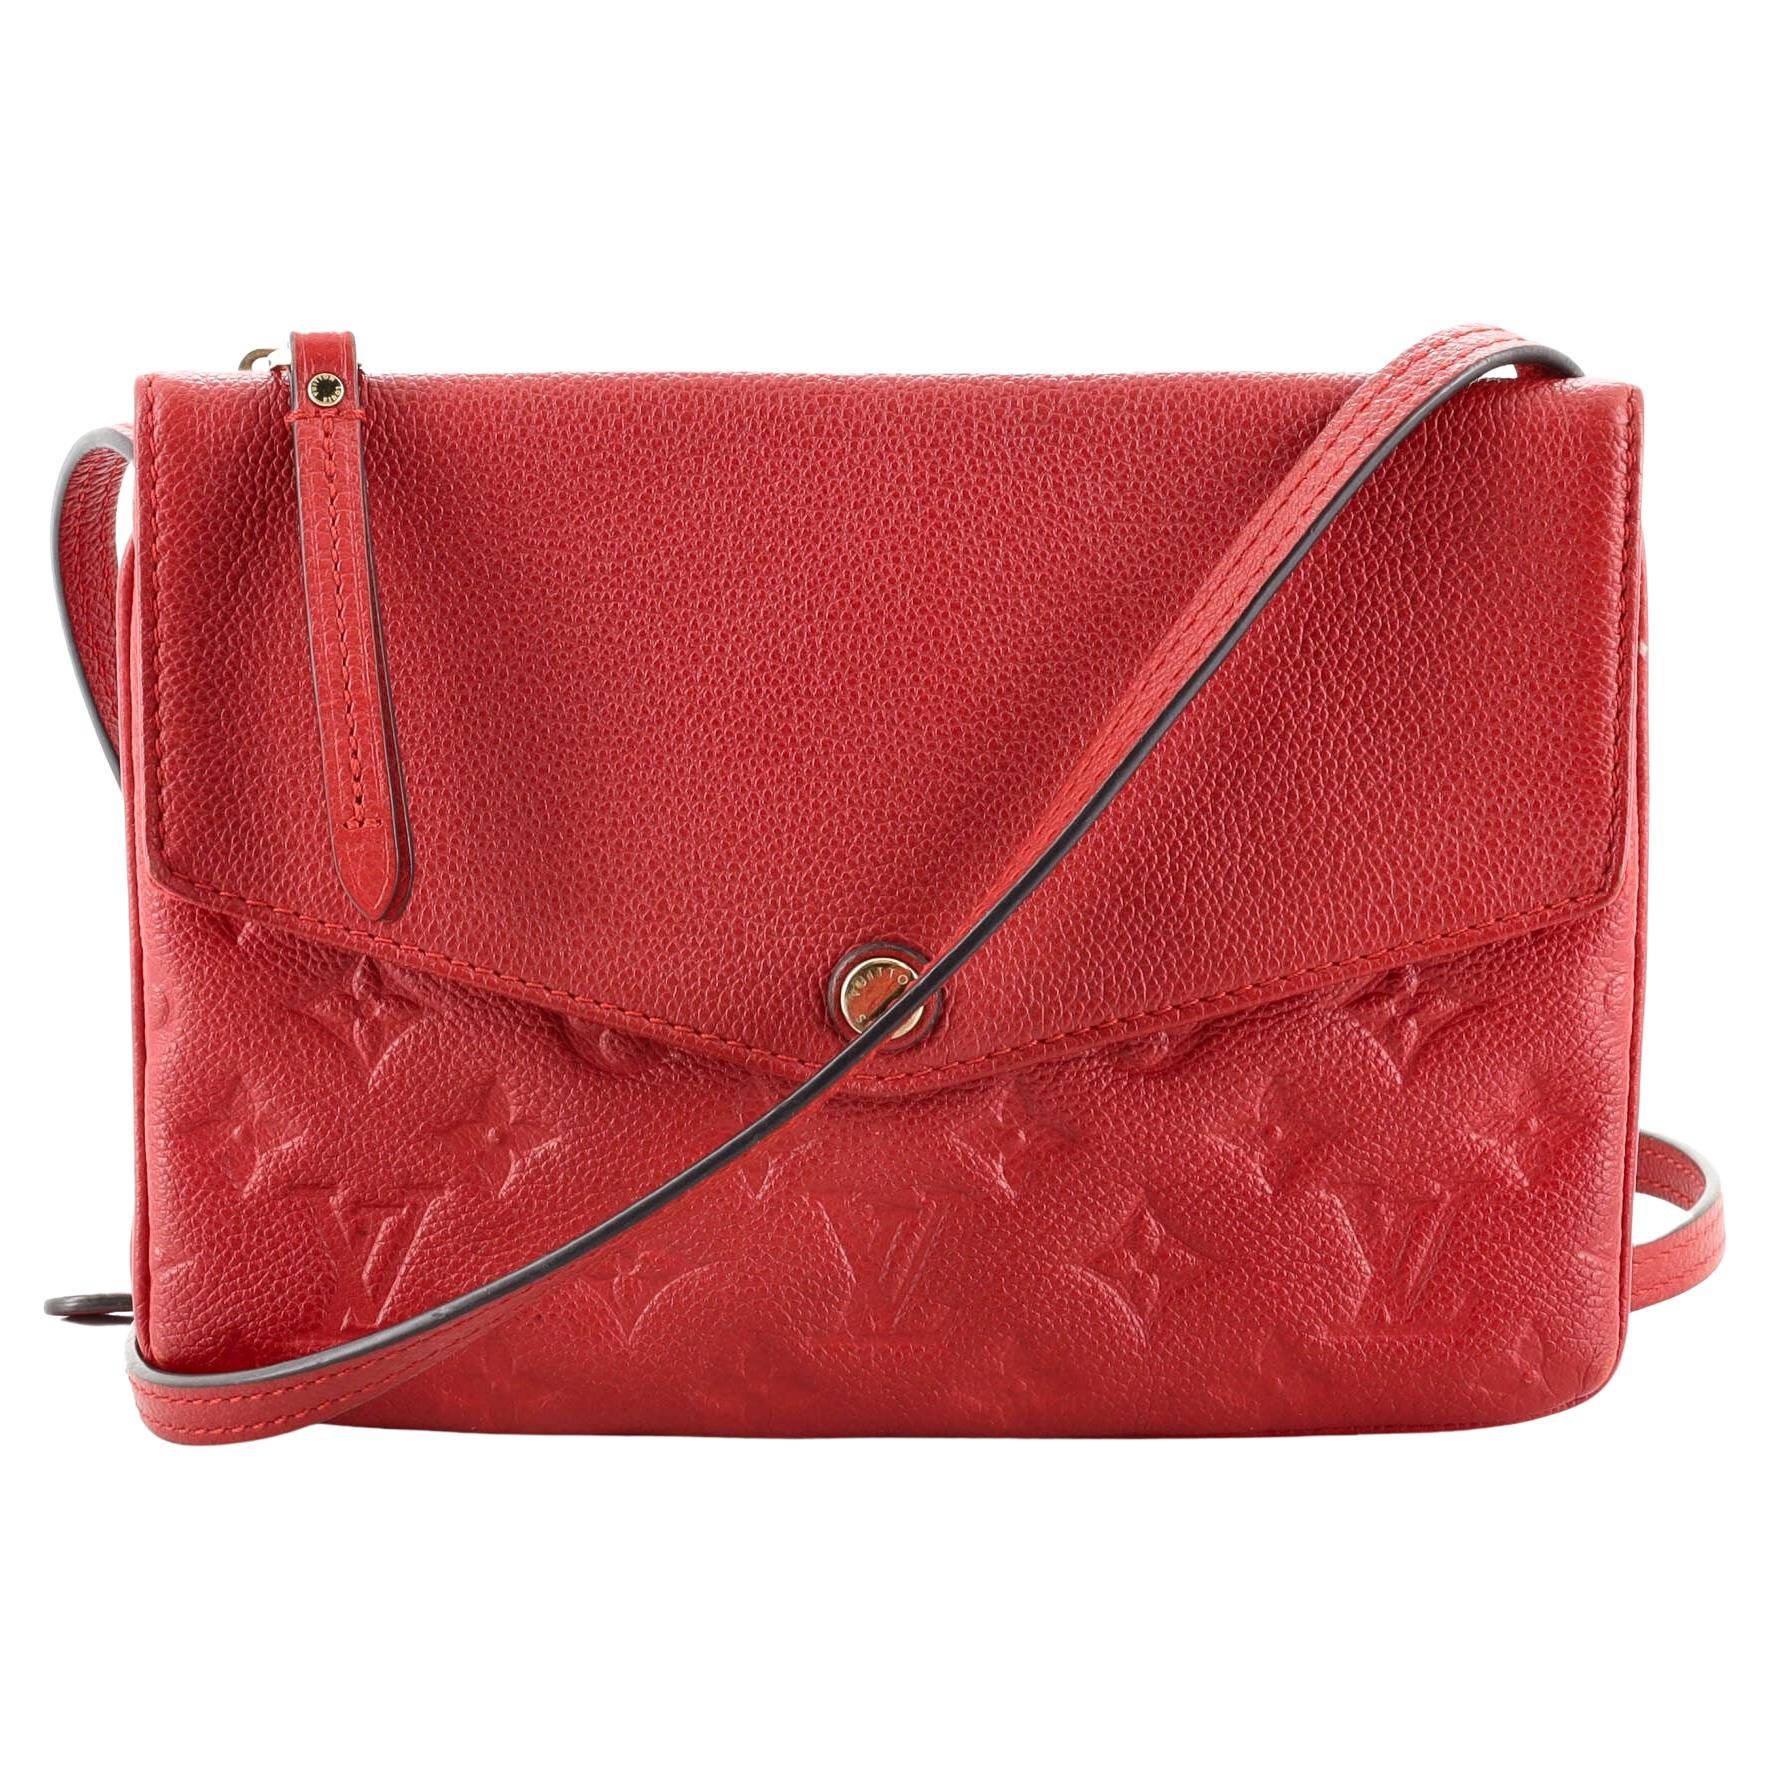 Louis Vuitton Twice Handbag